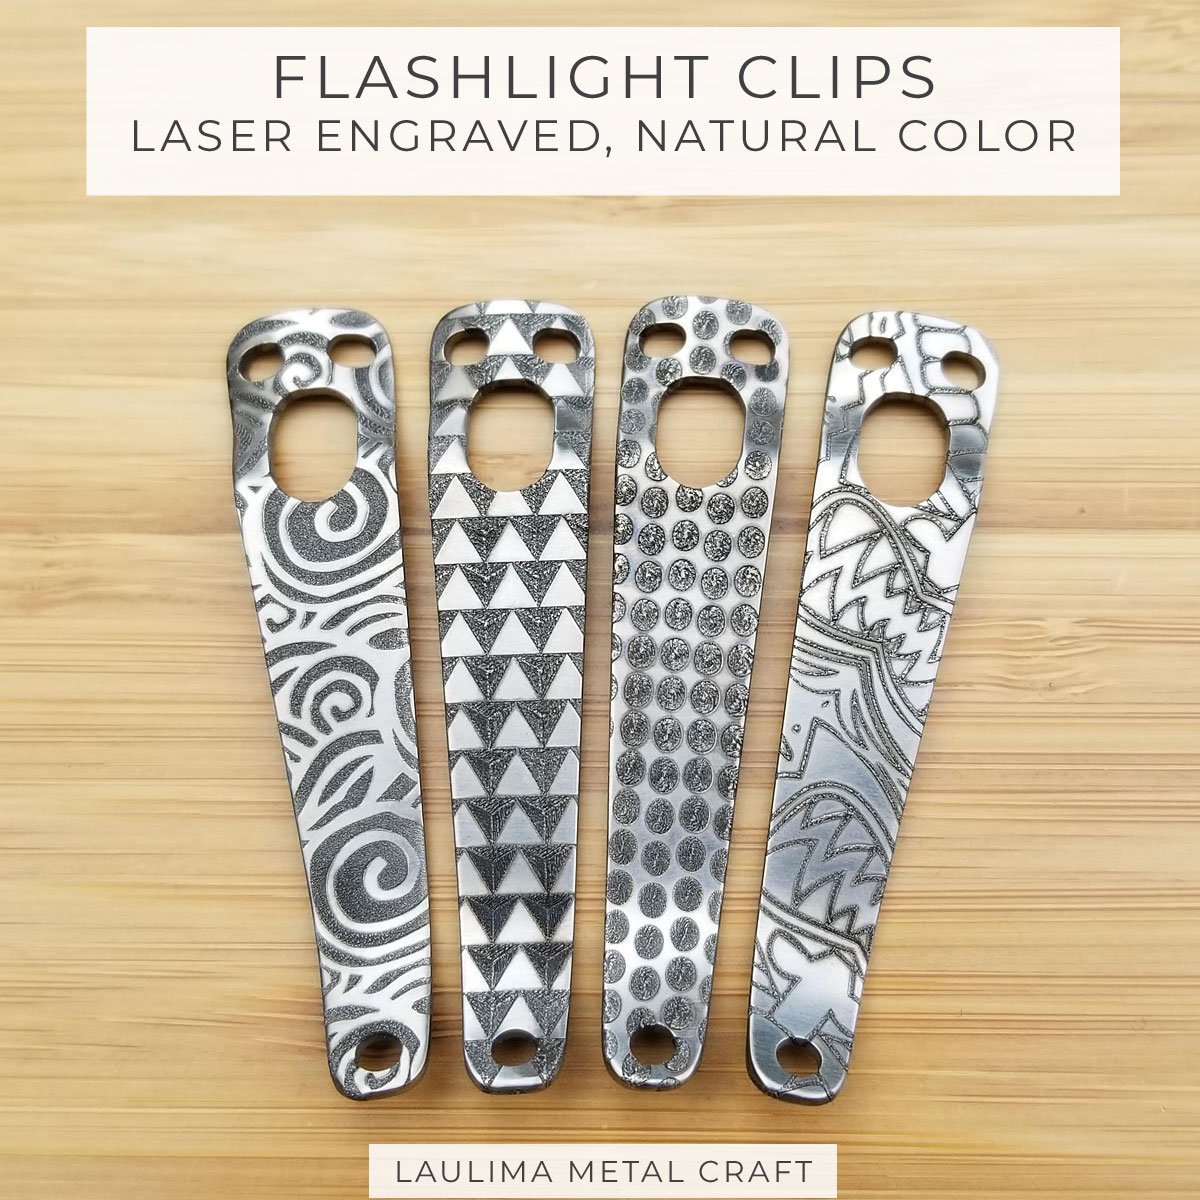 Flashlight Clips